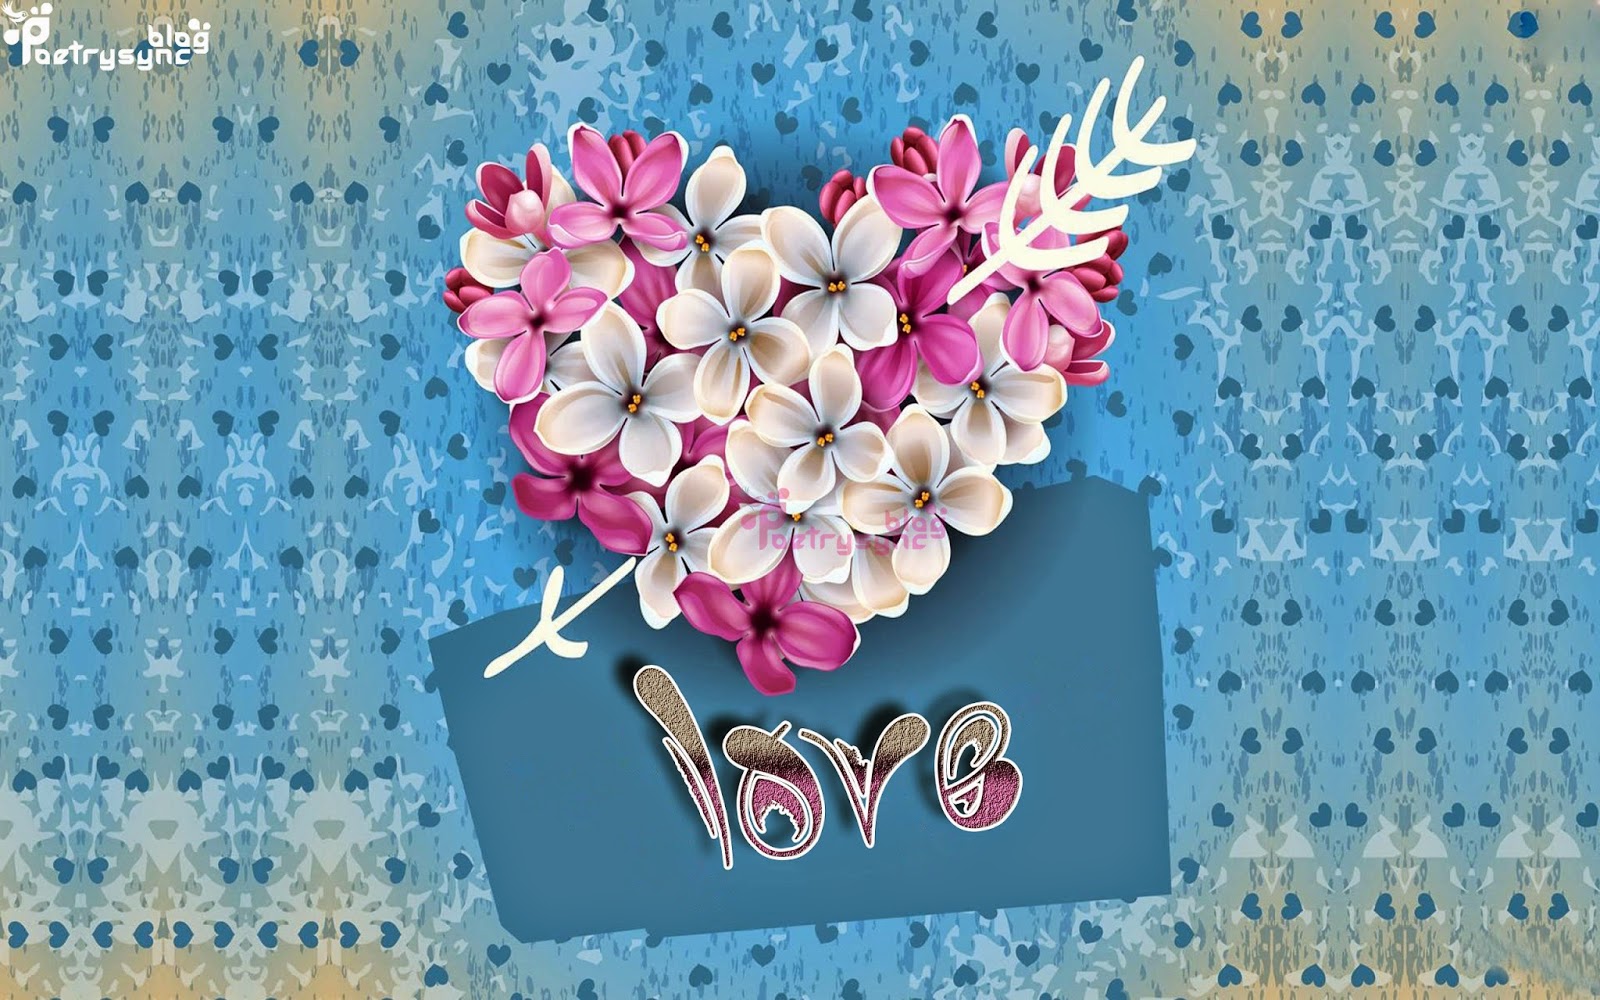 Love Heart Image Wallpaper Photo Hd Wide - Happy Valentine Day Santabanta - HD Wallpaper 